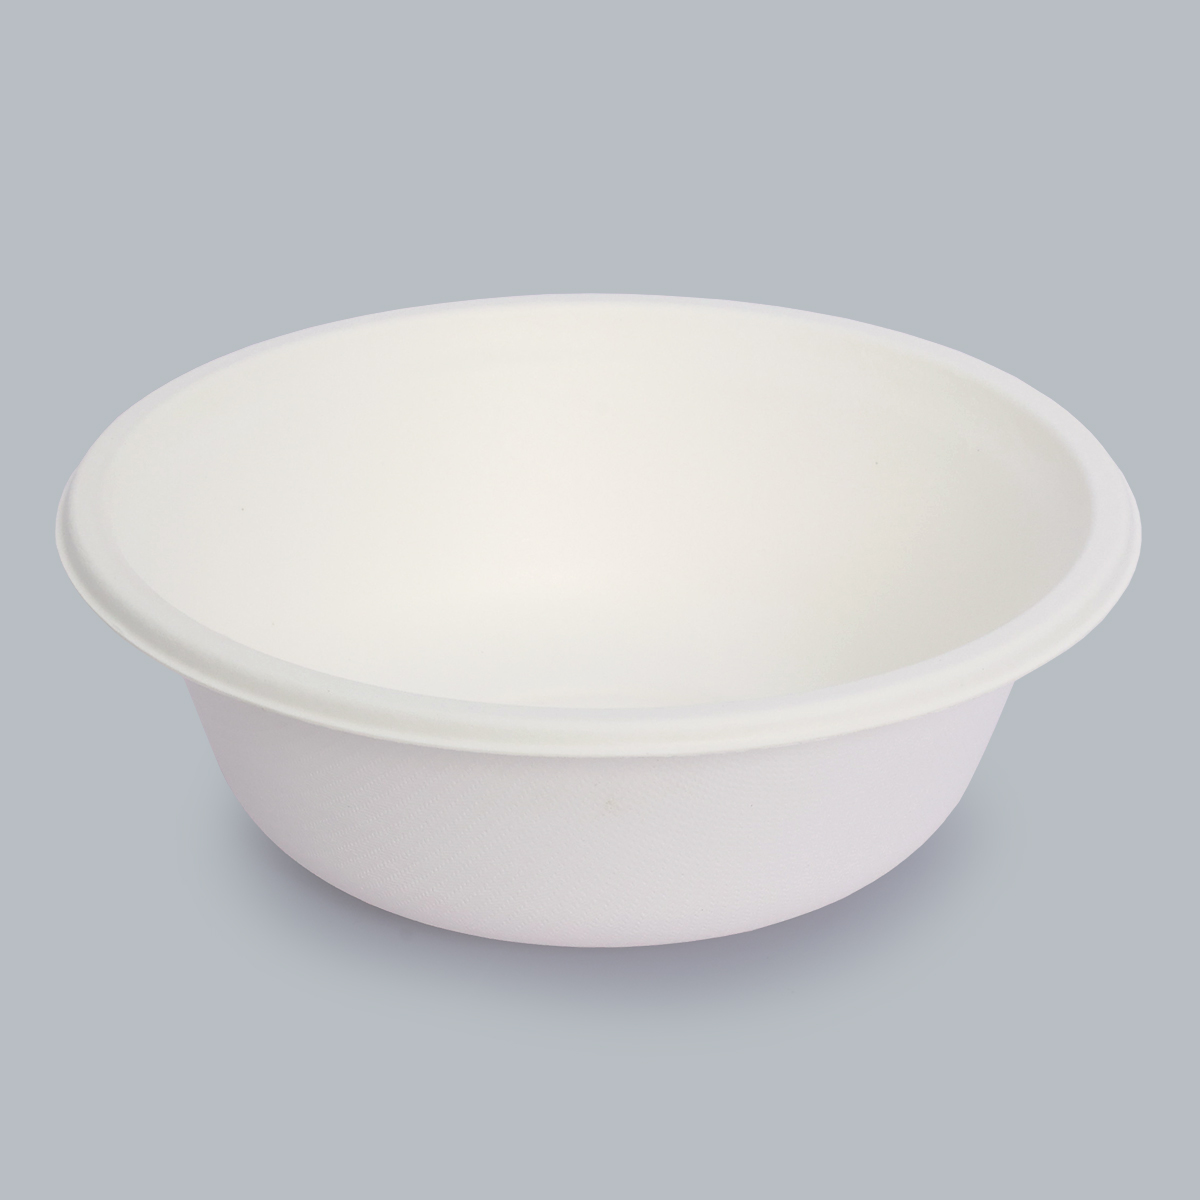 Takeout bowls Customizable bowls environmentally friendly tableware